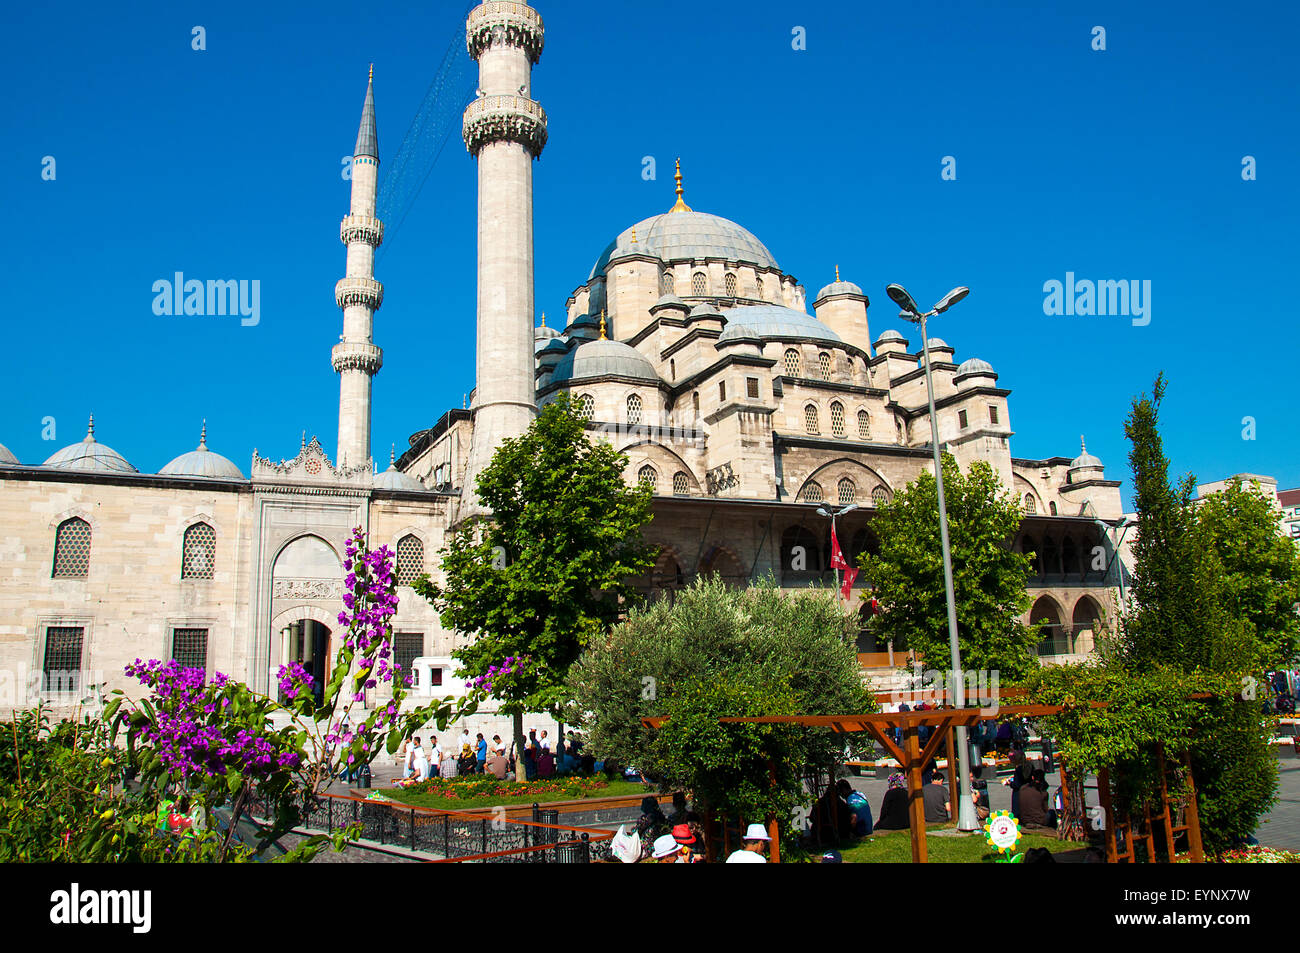 The New Mosque (Yeni cami), Eminonu district, Istanbul, Turkey. Stock Photo